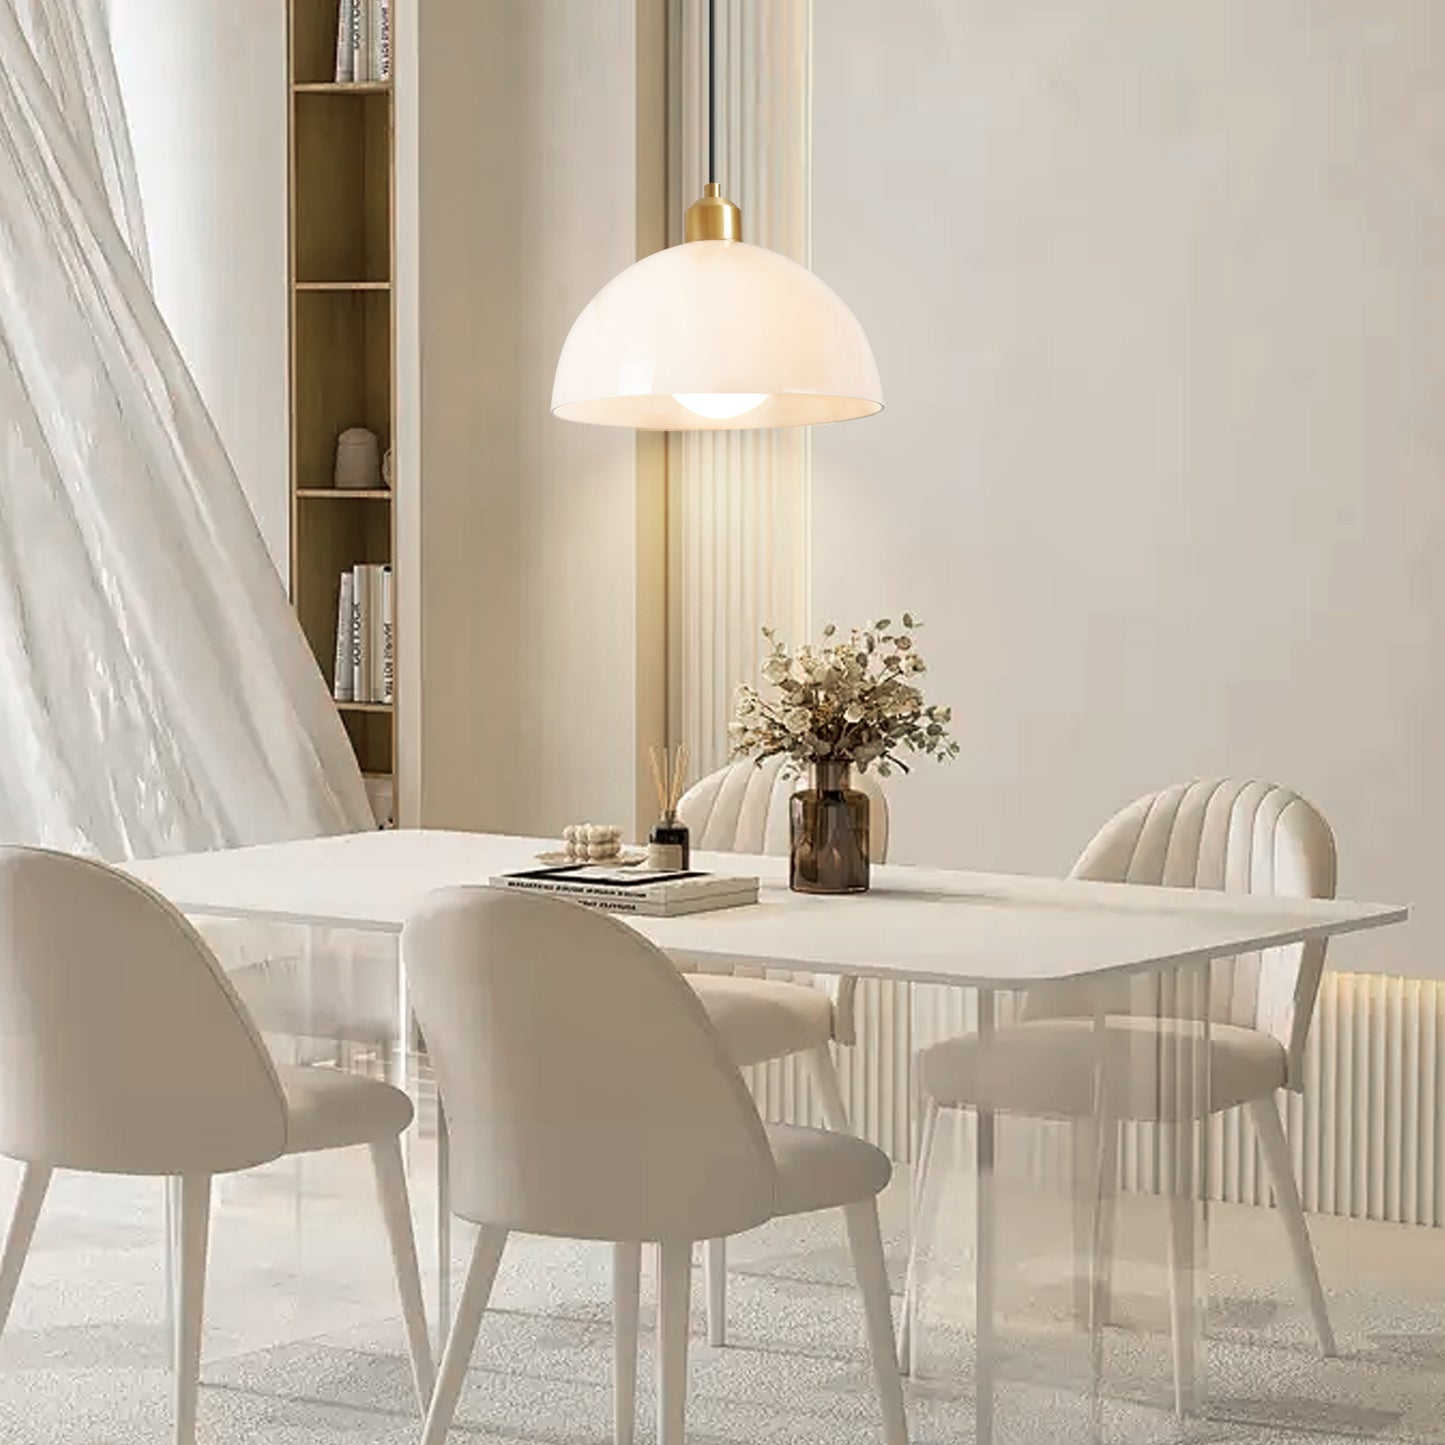 (N) ARTURESTHOME Nordic Modern Glass Pendant Simple Dining Room Lighting